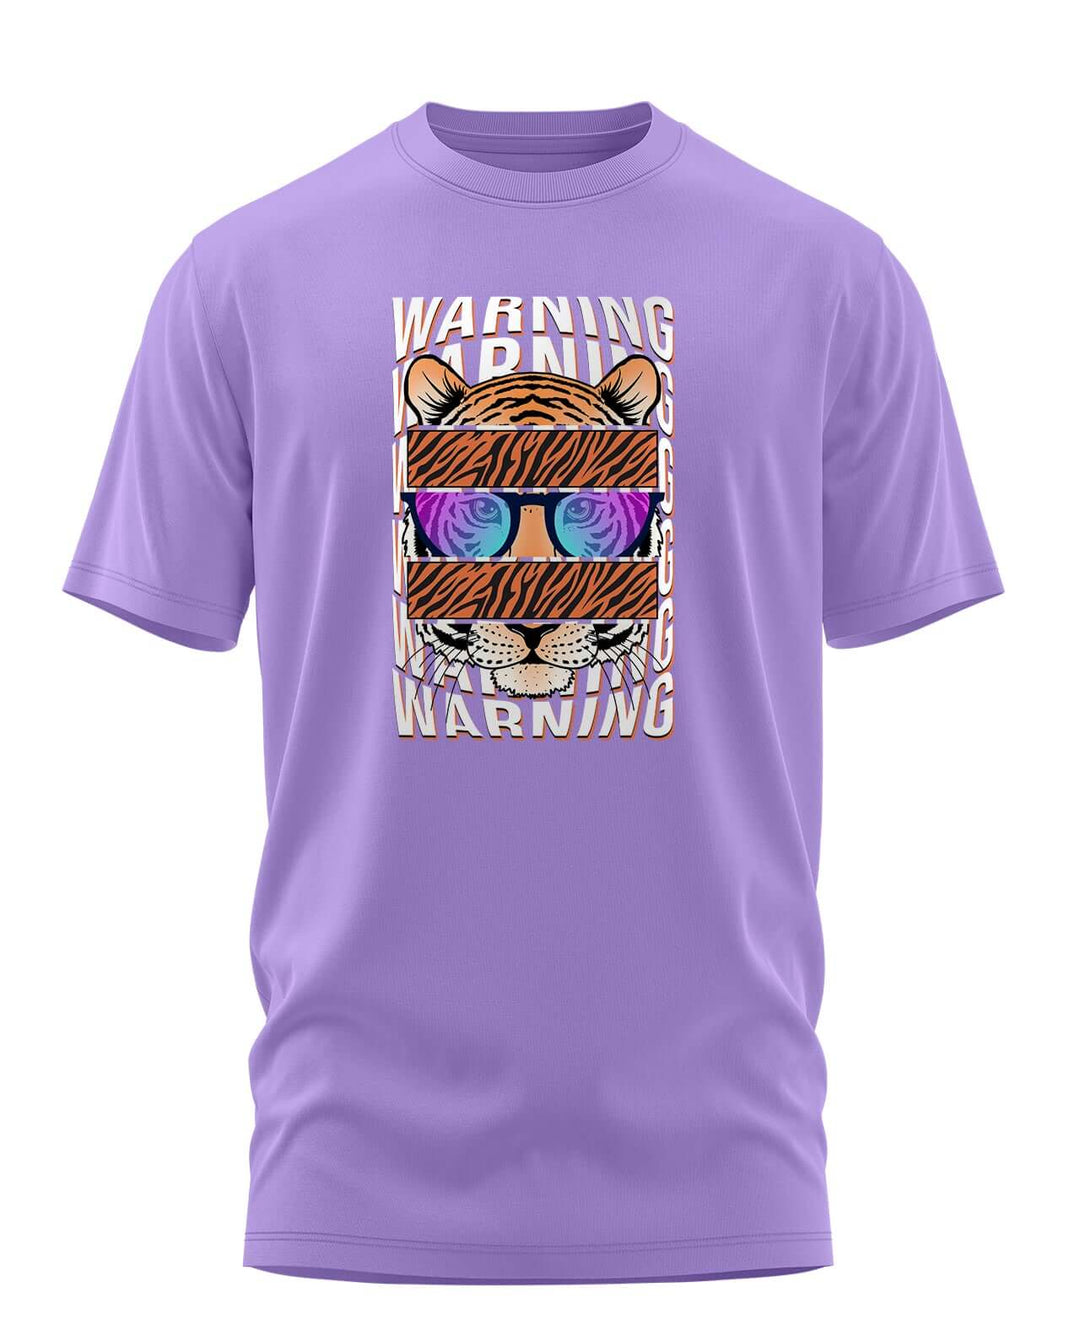 Tiger's warning T-shirt